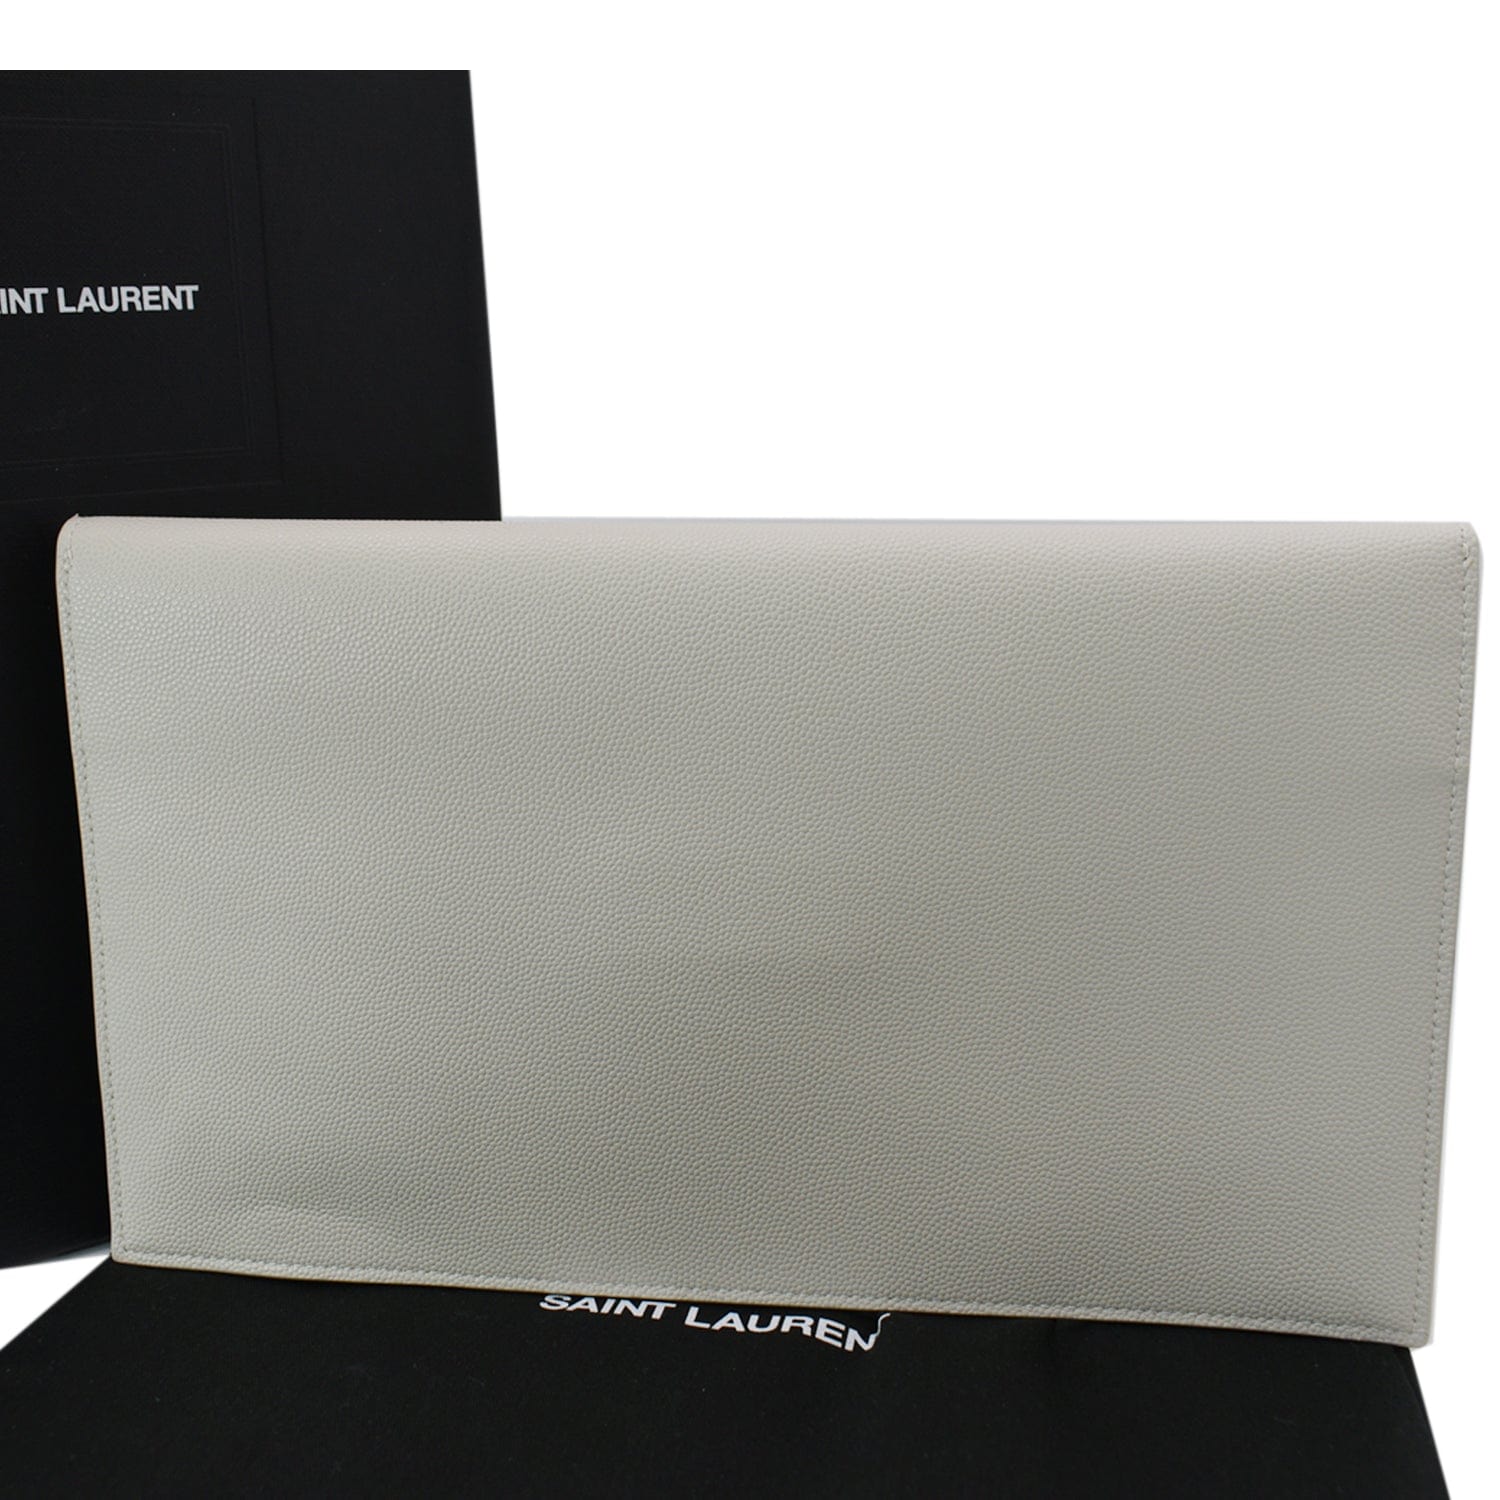 White Uptown YSL-plaque grained-leather clutch bag, Saint Laurent